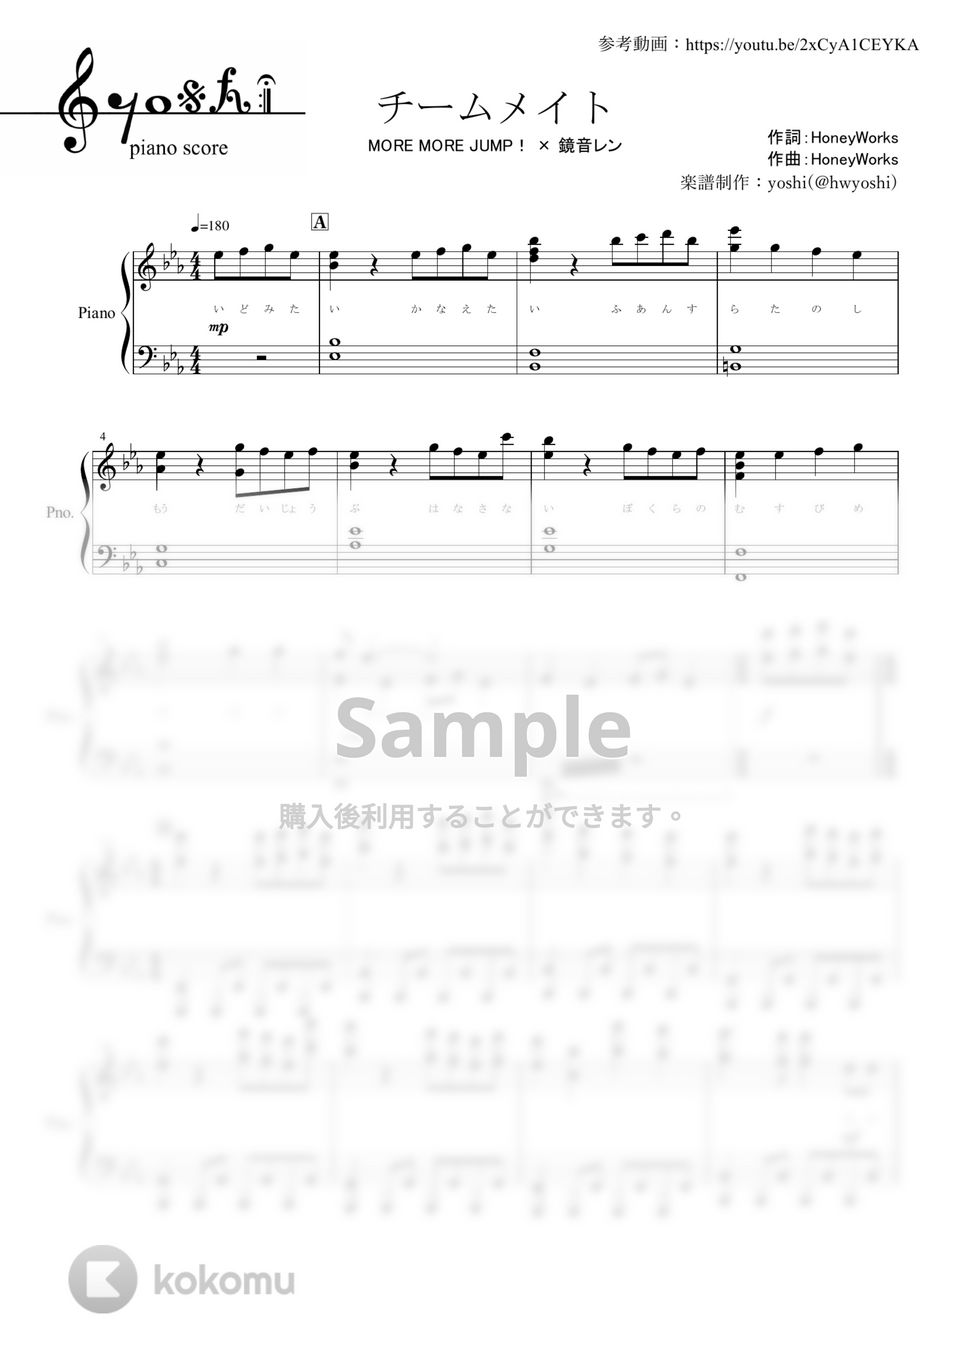 HoneyWorks - チームメイト (ピアノ楽譜/MORE MORE JUMP！×鏡音レン) by yoshi